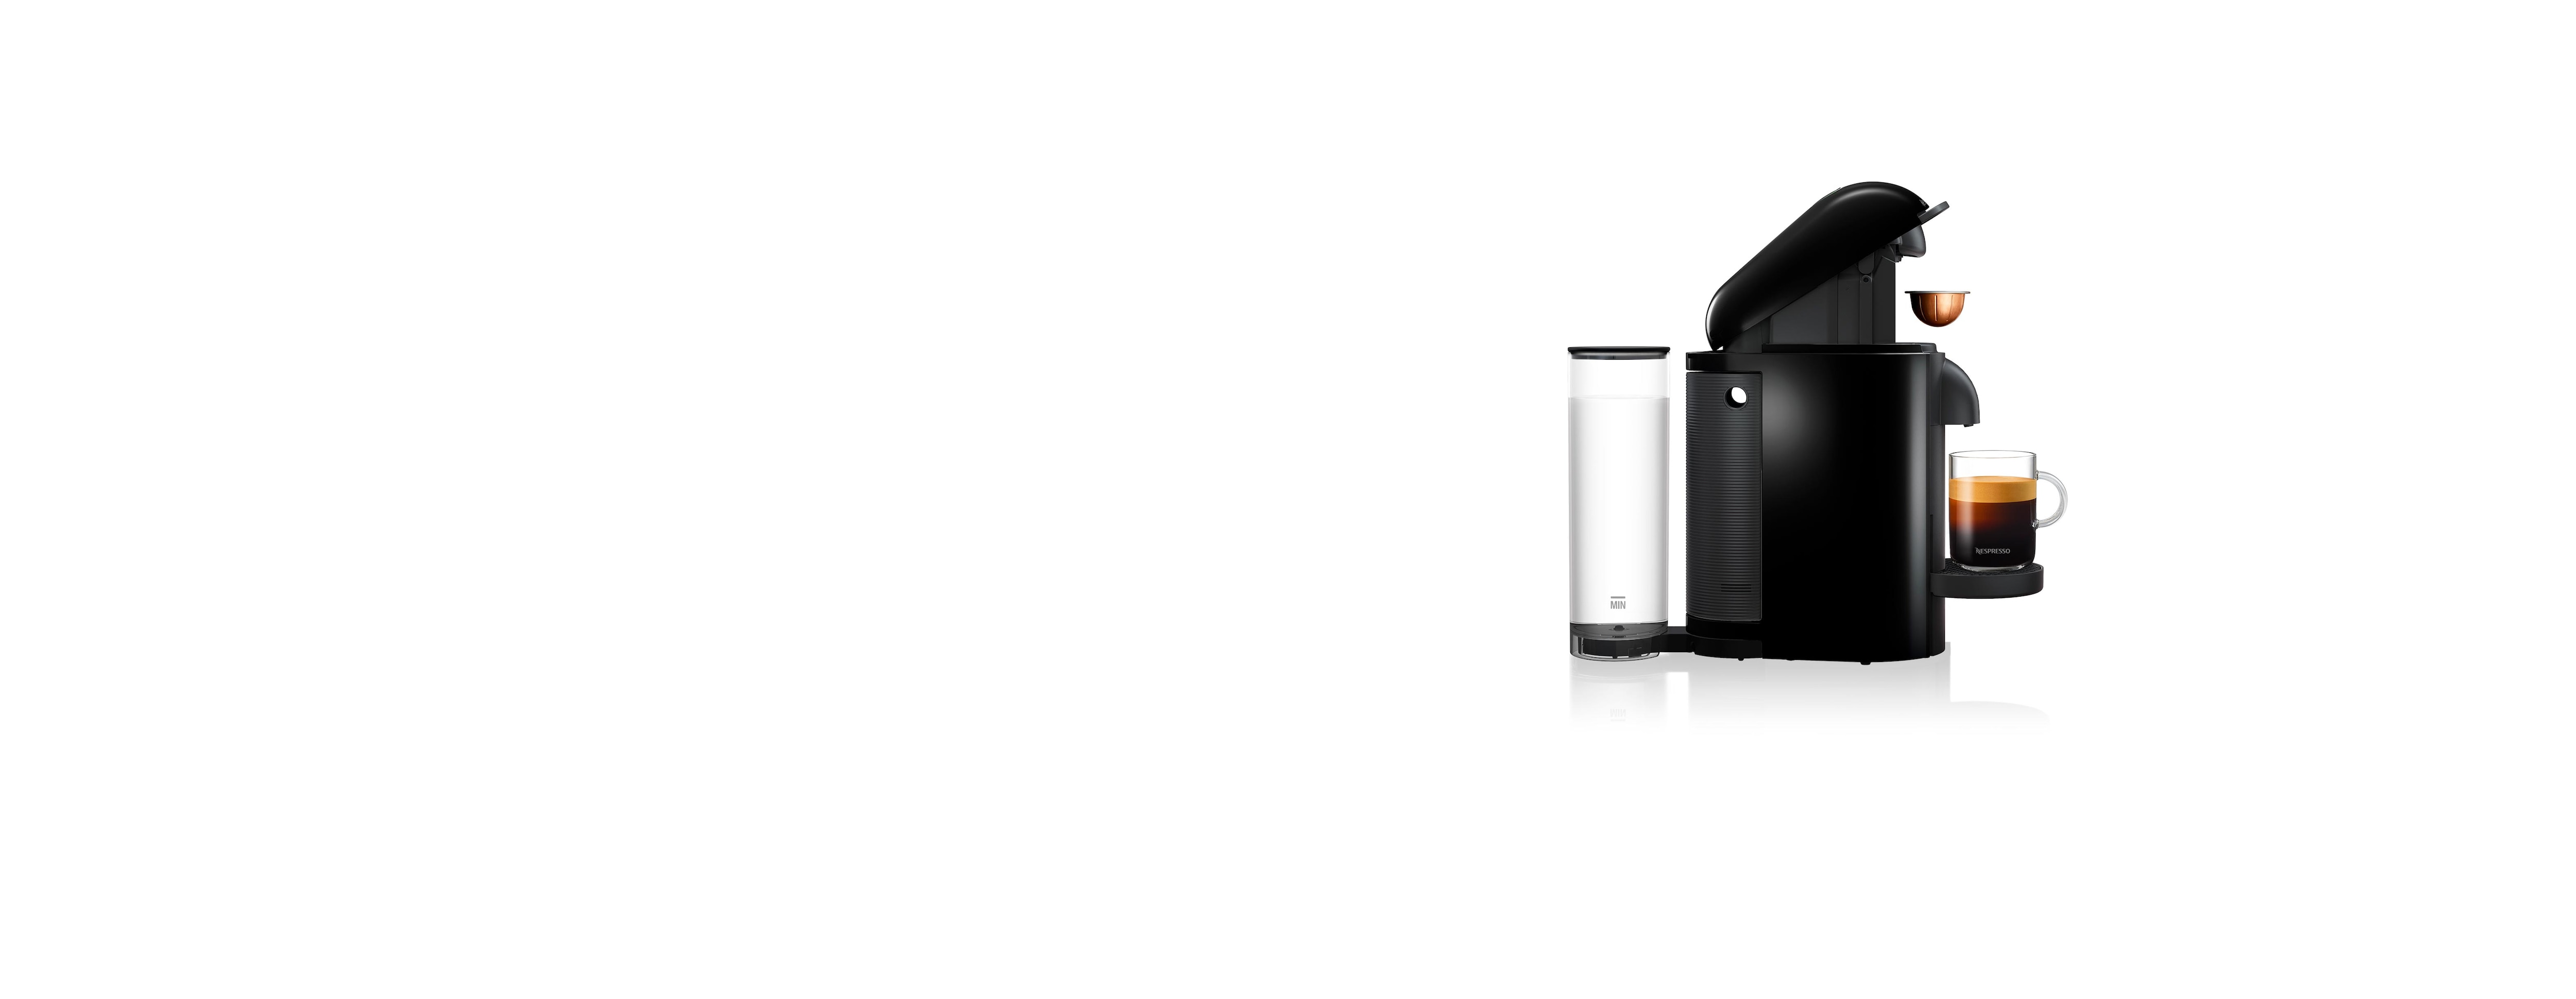 Cafetera Vertuo Plus Nespresso® color negro